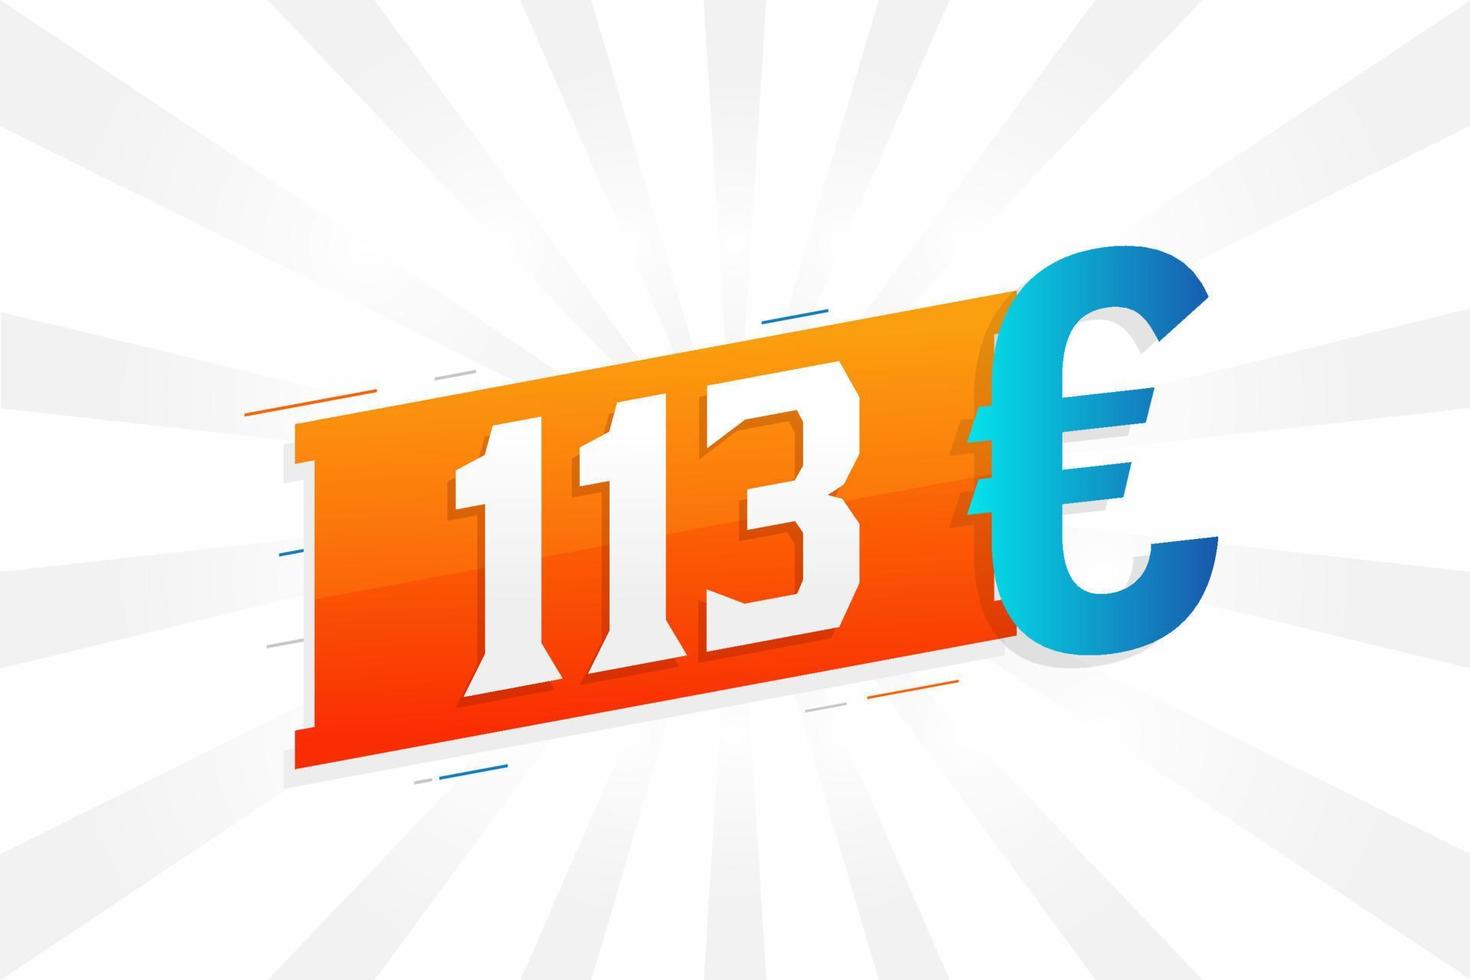 113 euro valuta vektor text symbol. 113 euro europeisk union pengar stock vektor